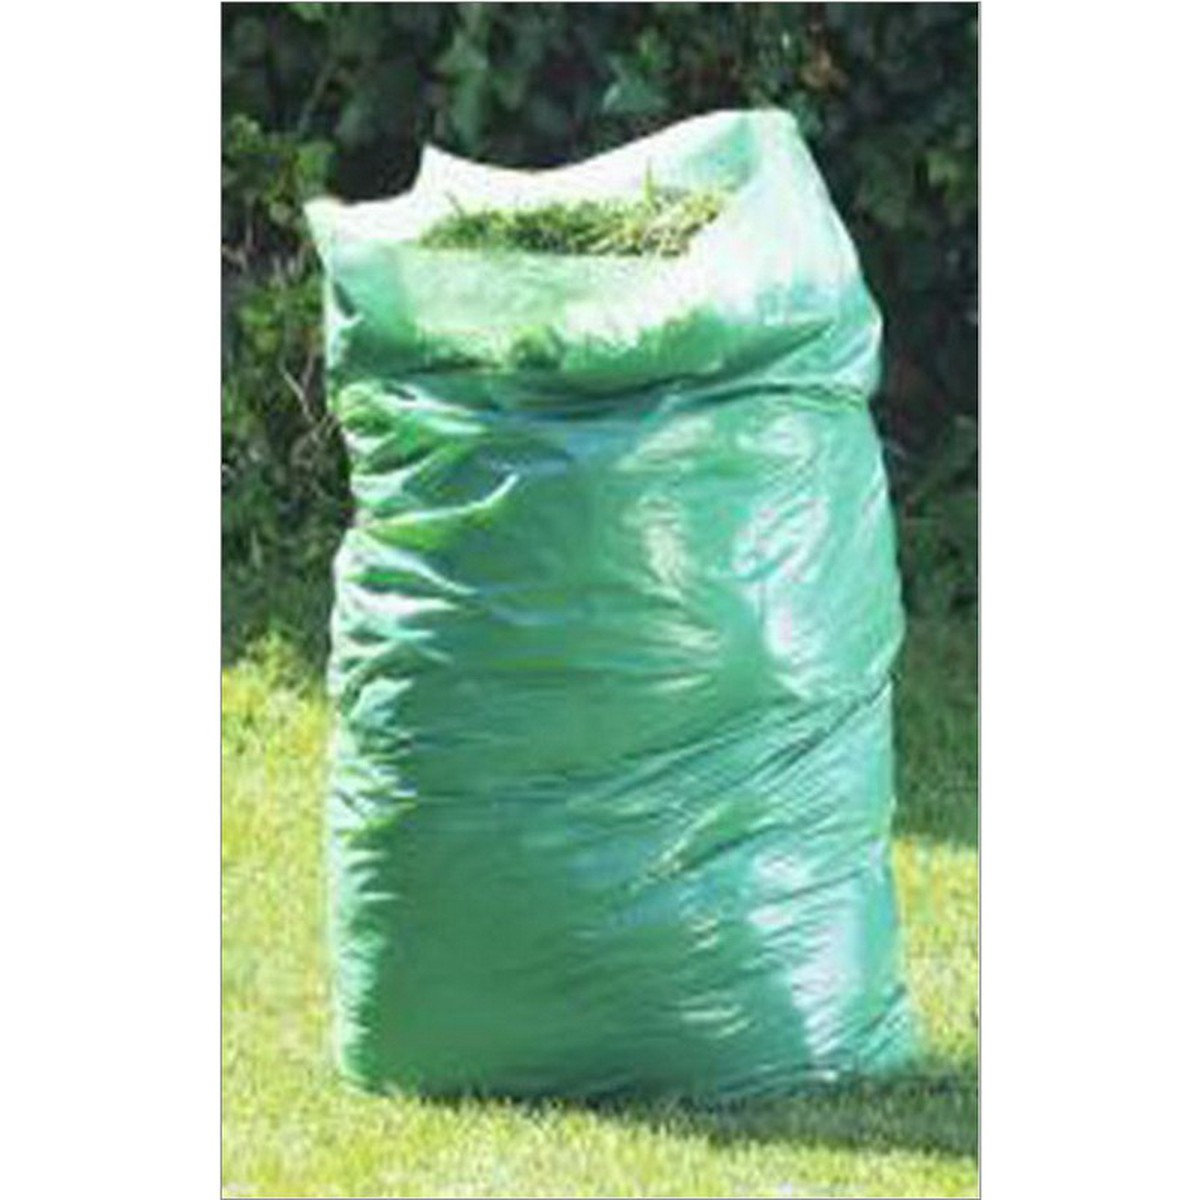 Sacs, Nortene GARDENSAC 10 Sacs déchets verts PE 0.85x1.05m